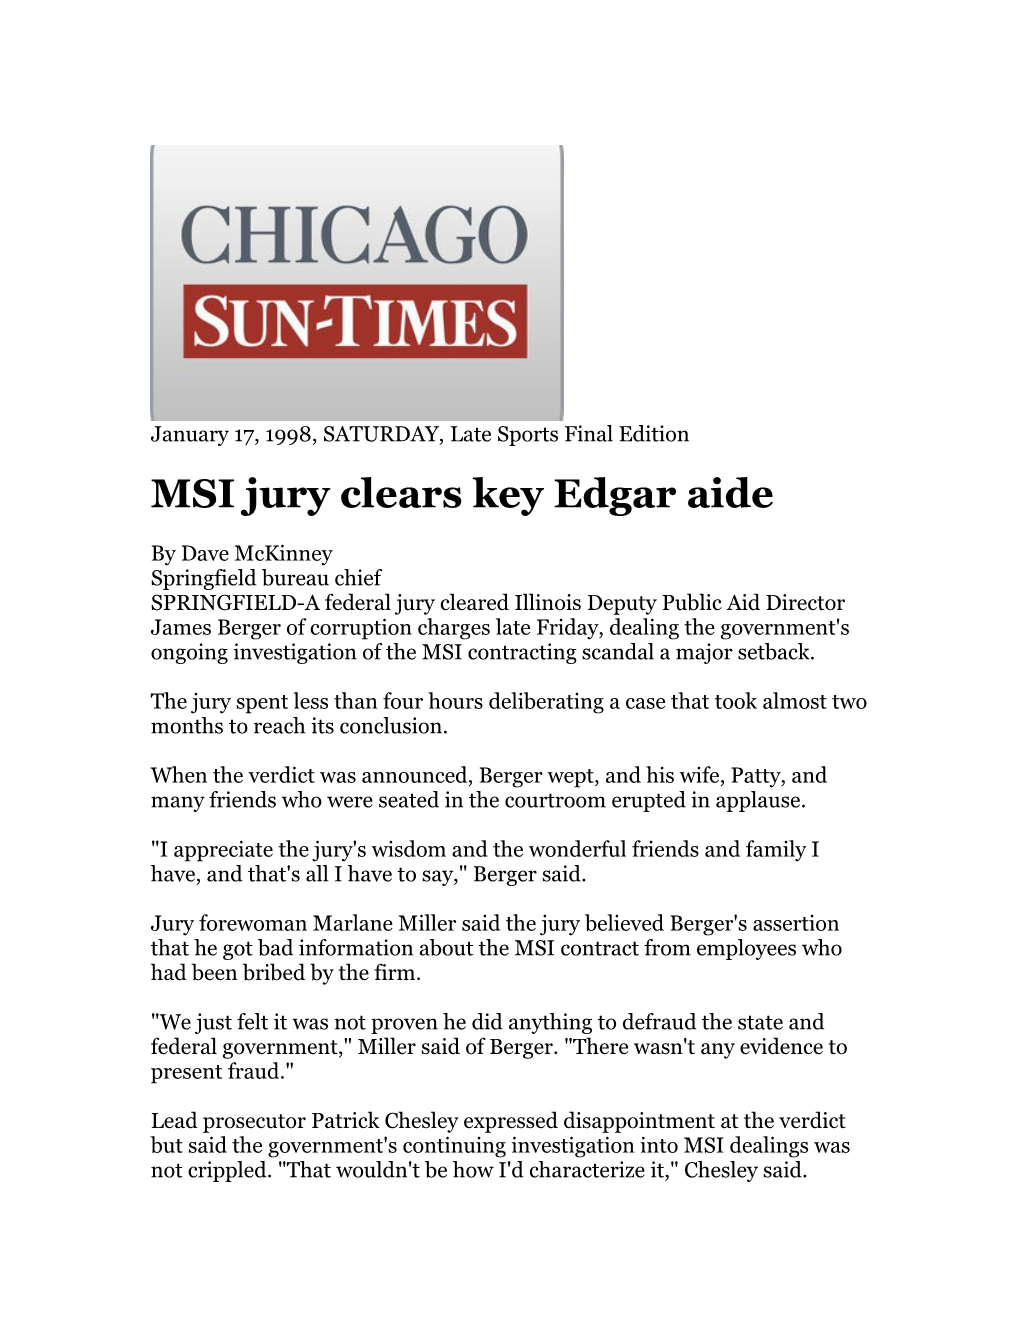 MSI Jury Clears Key Edgar Aide